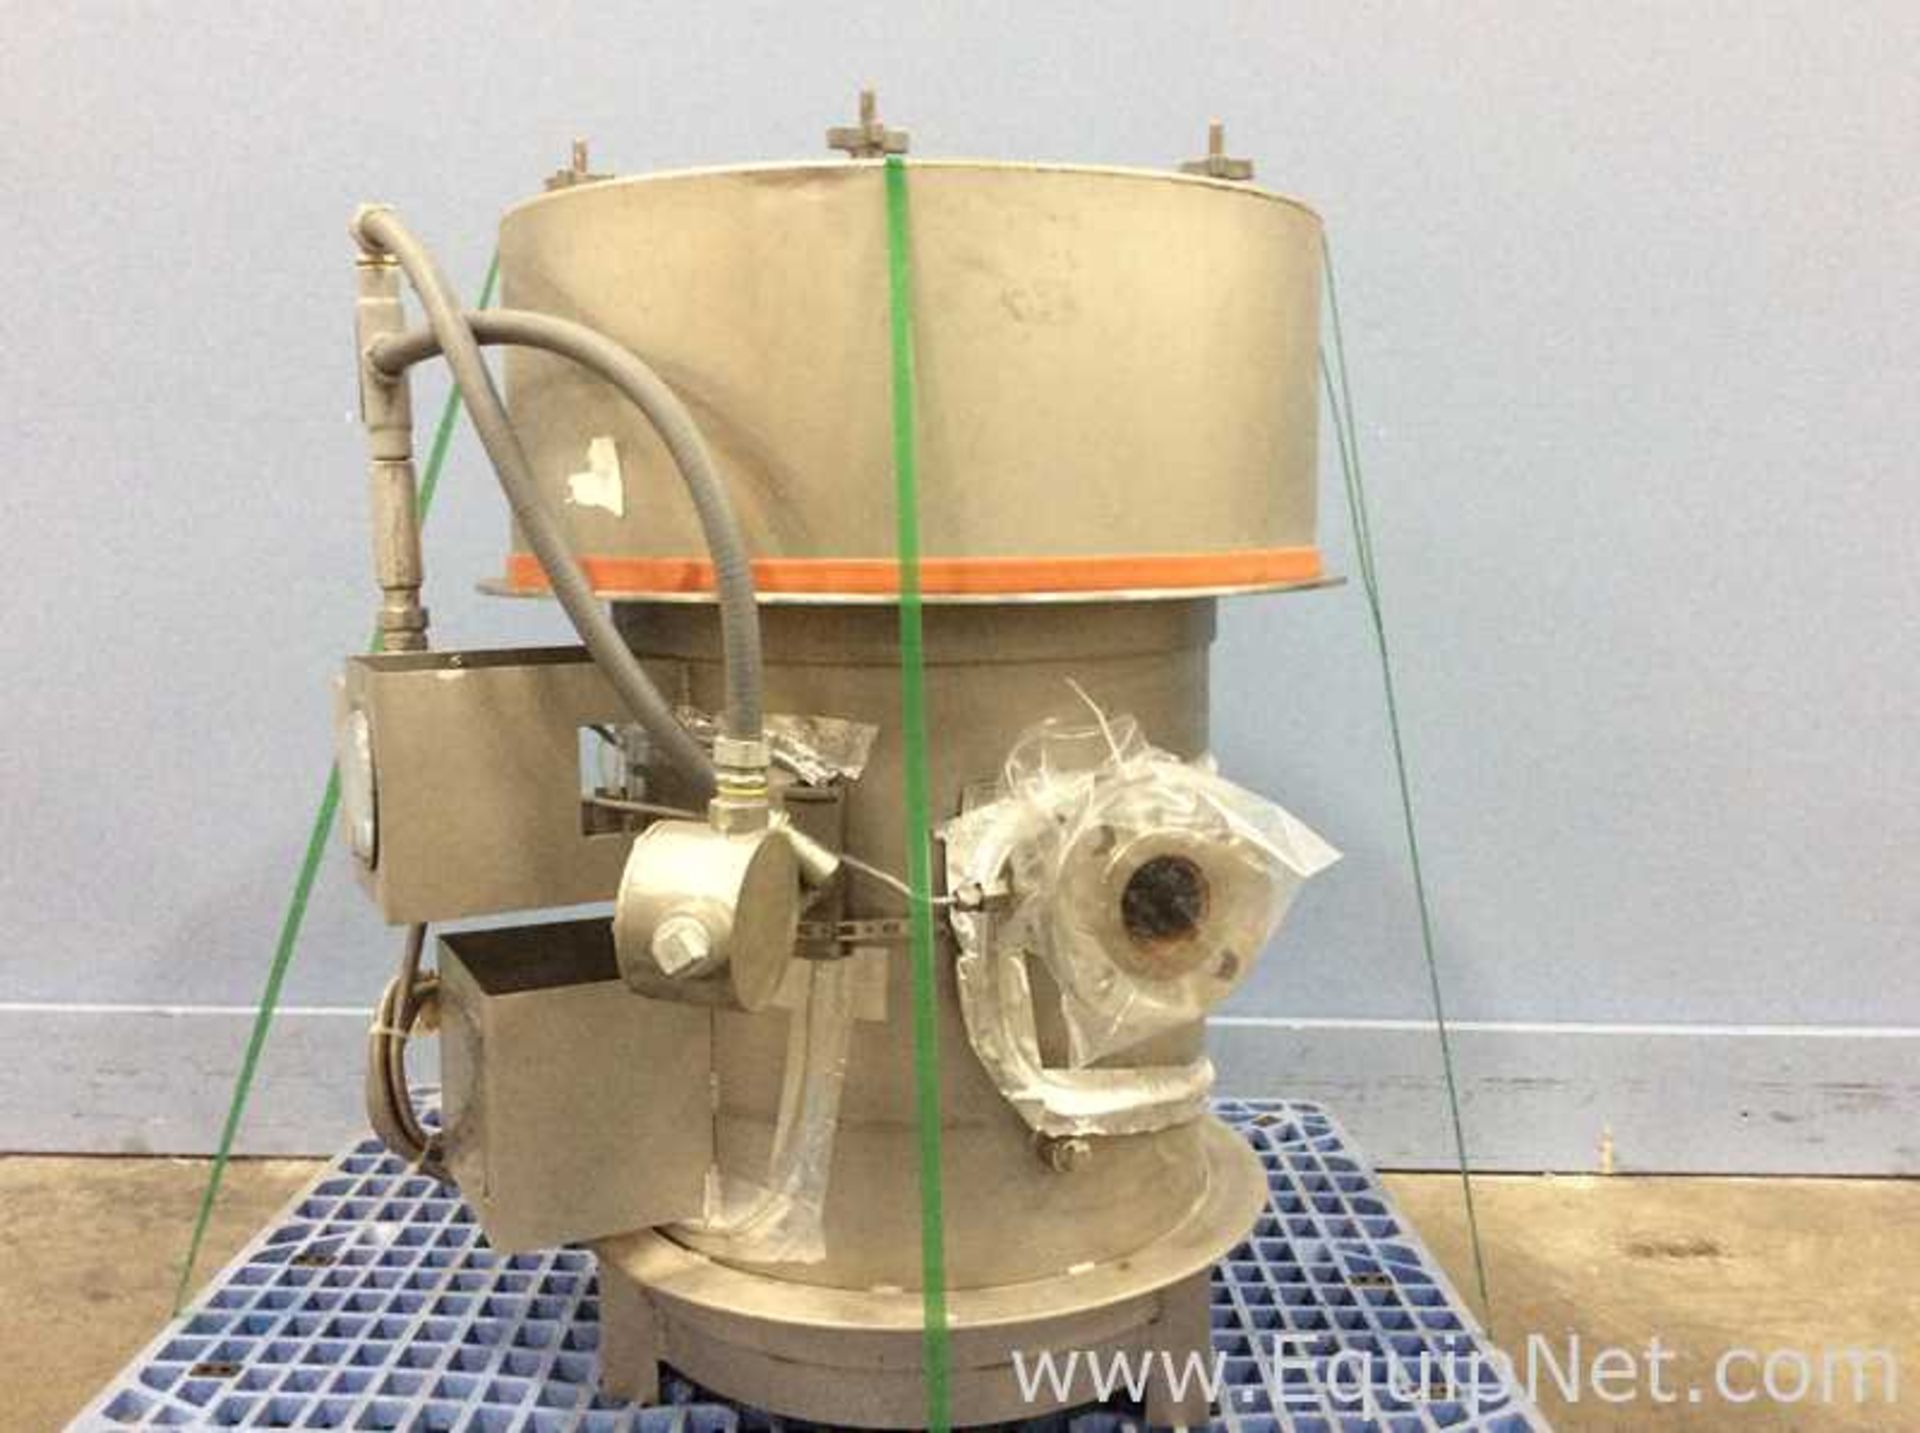 Flanders Filtering HP G-1 IR Explosion Proof Heated Water Filter Tank